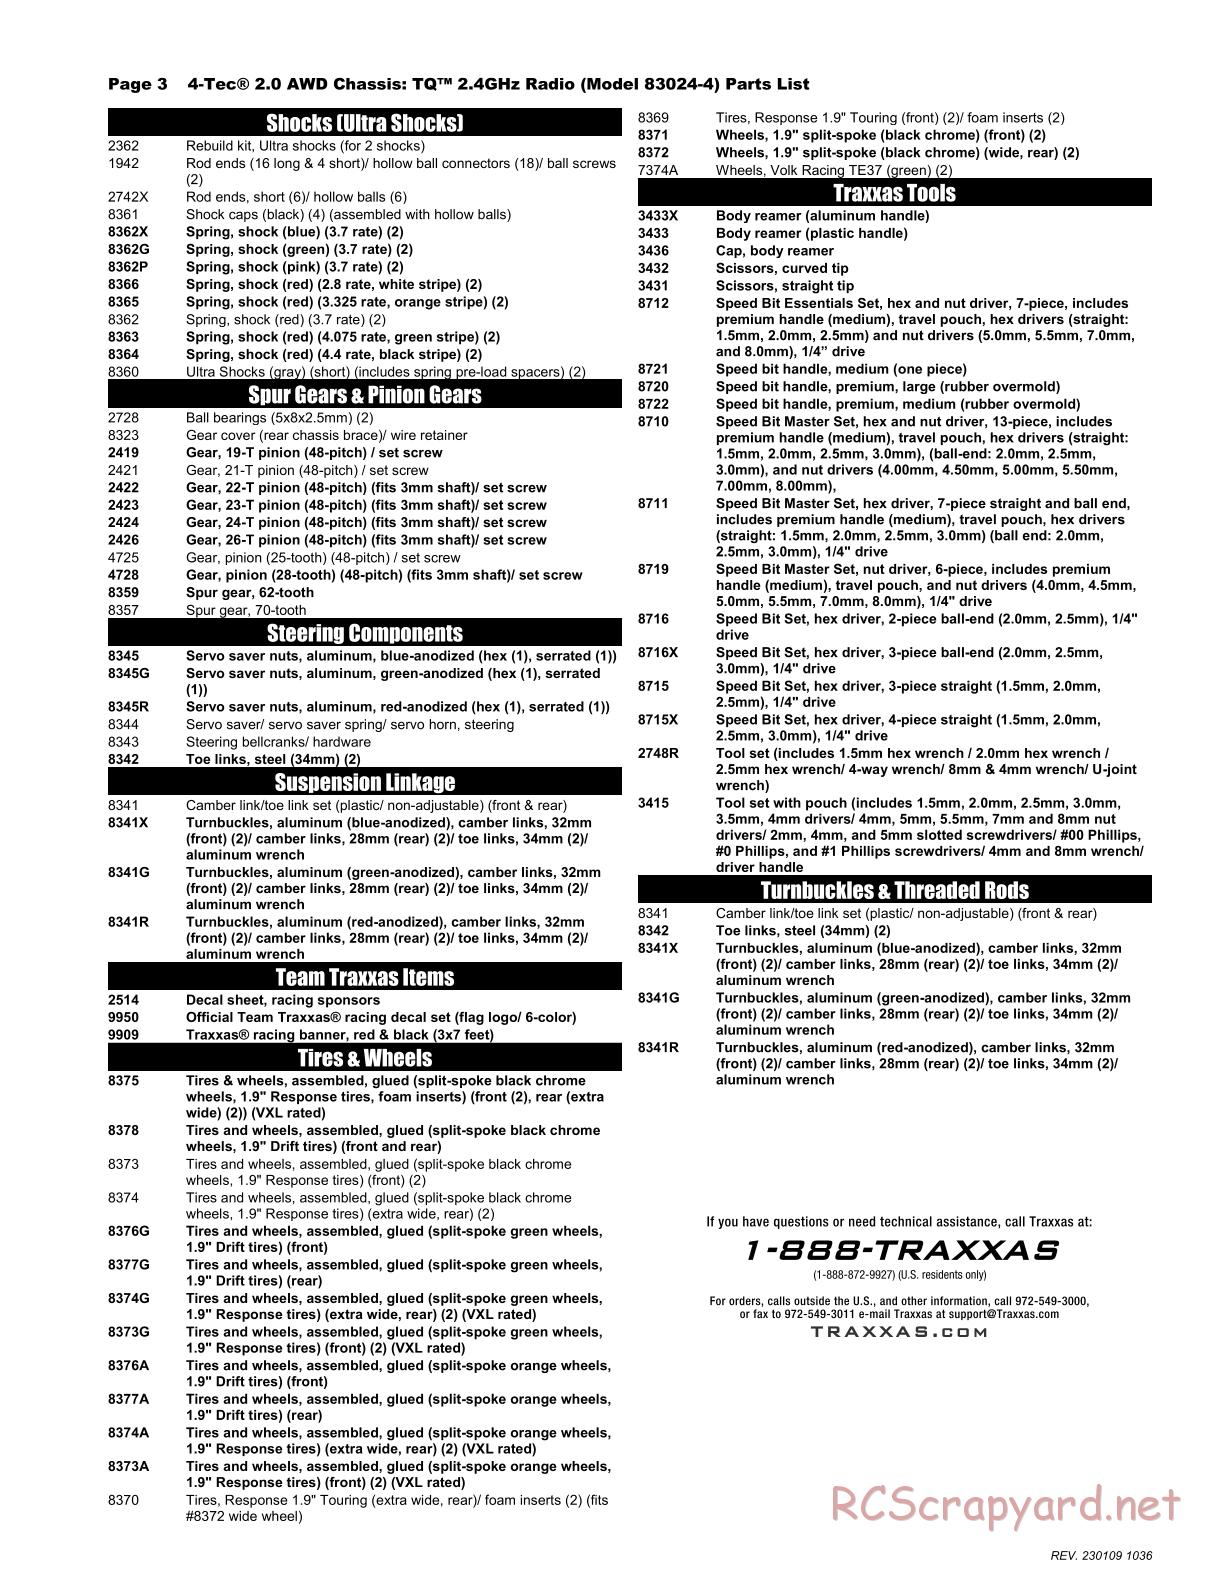 Traxxas - 4-Tec 2.0 XL-5 - Parts List - Page 3